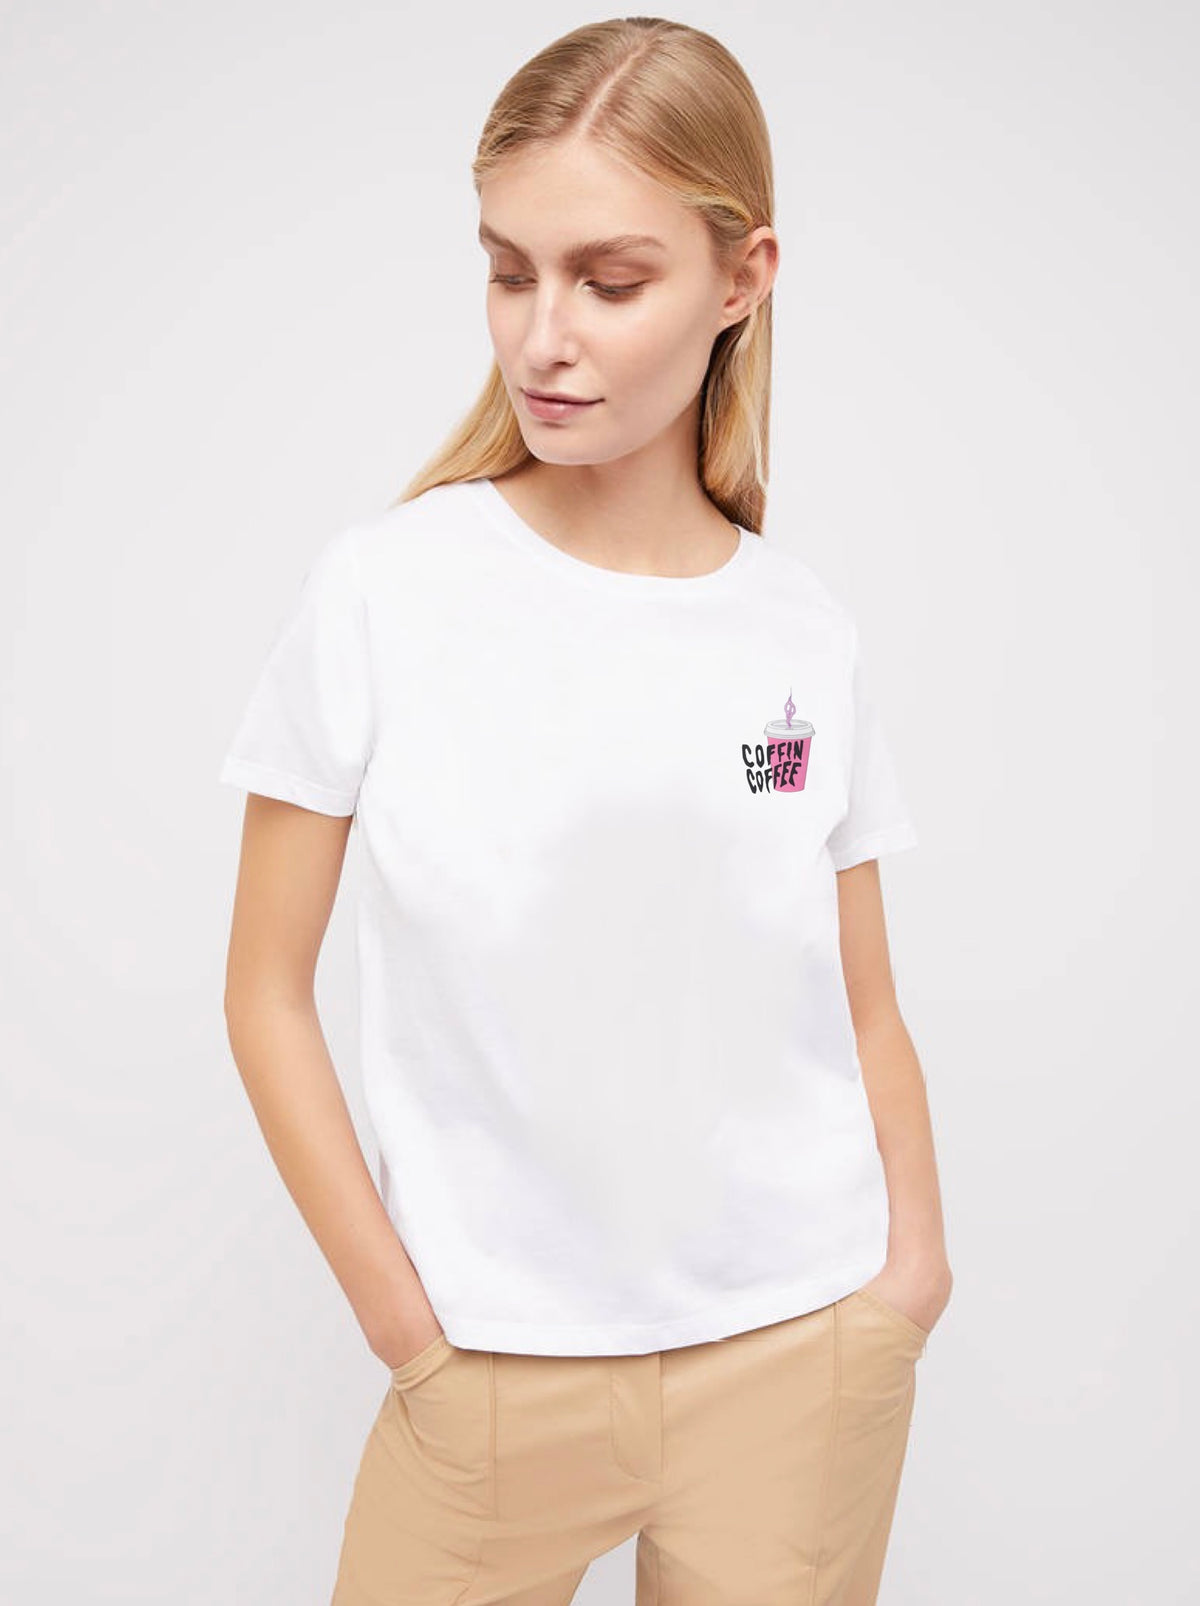 Teen White Cotton Graphic T-shirt